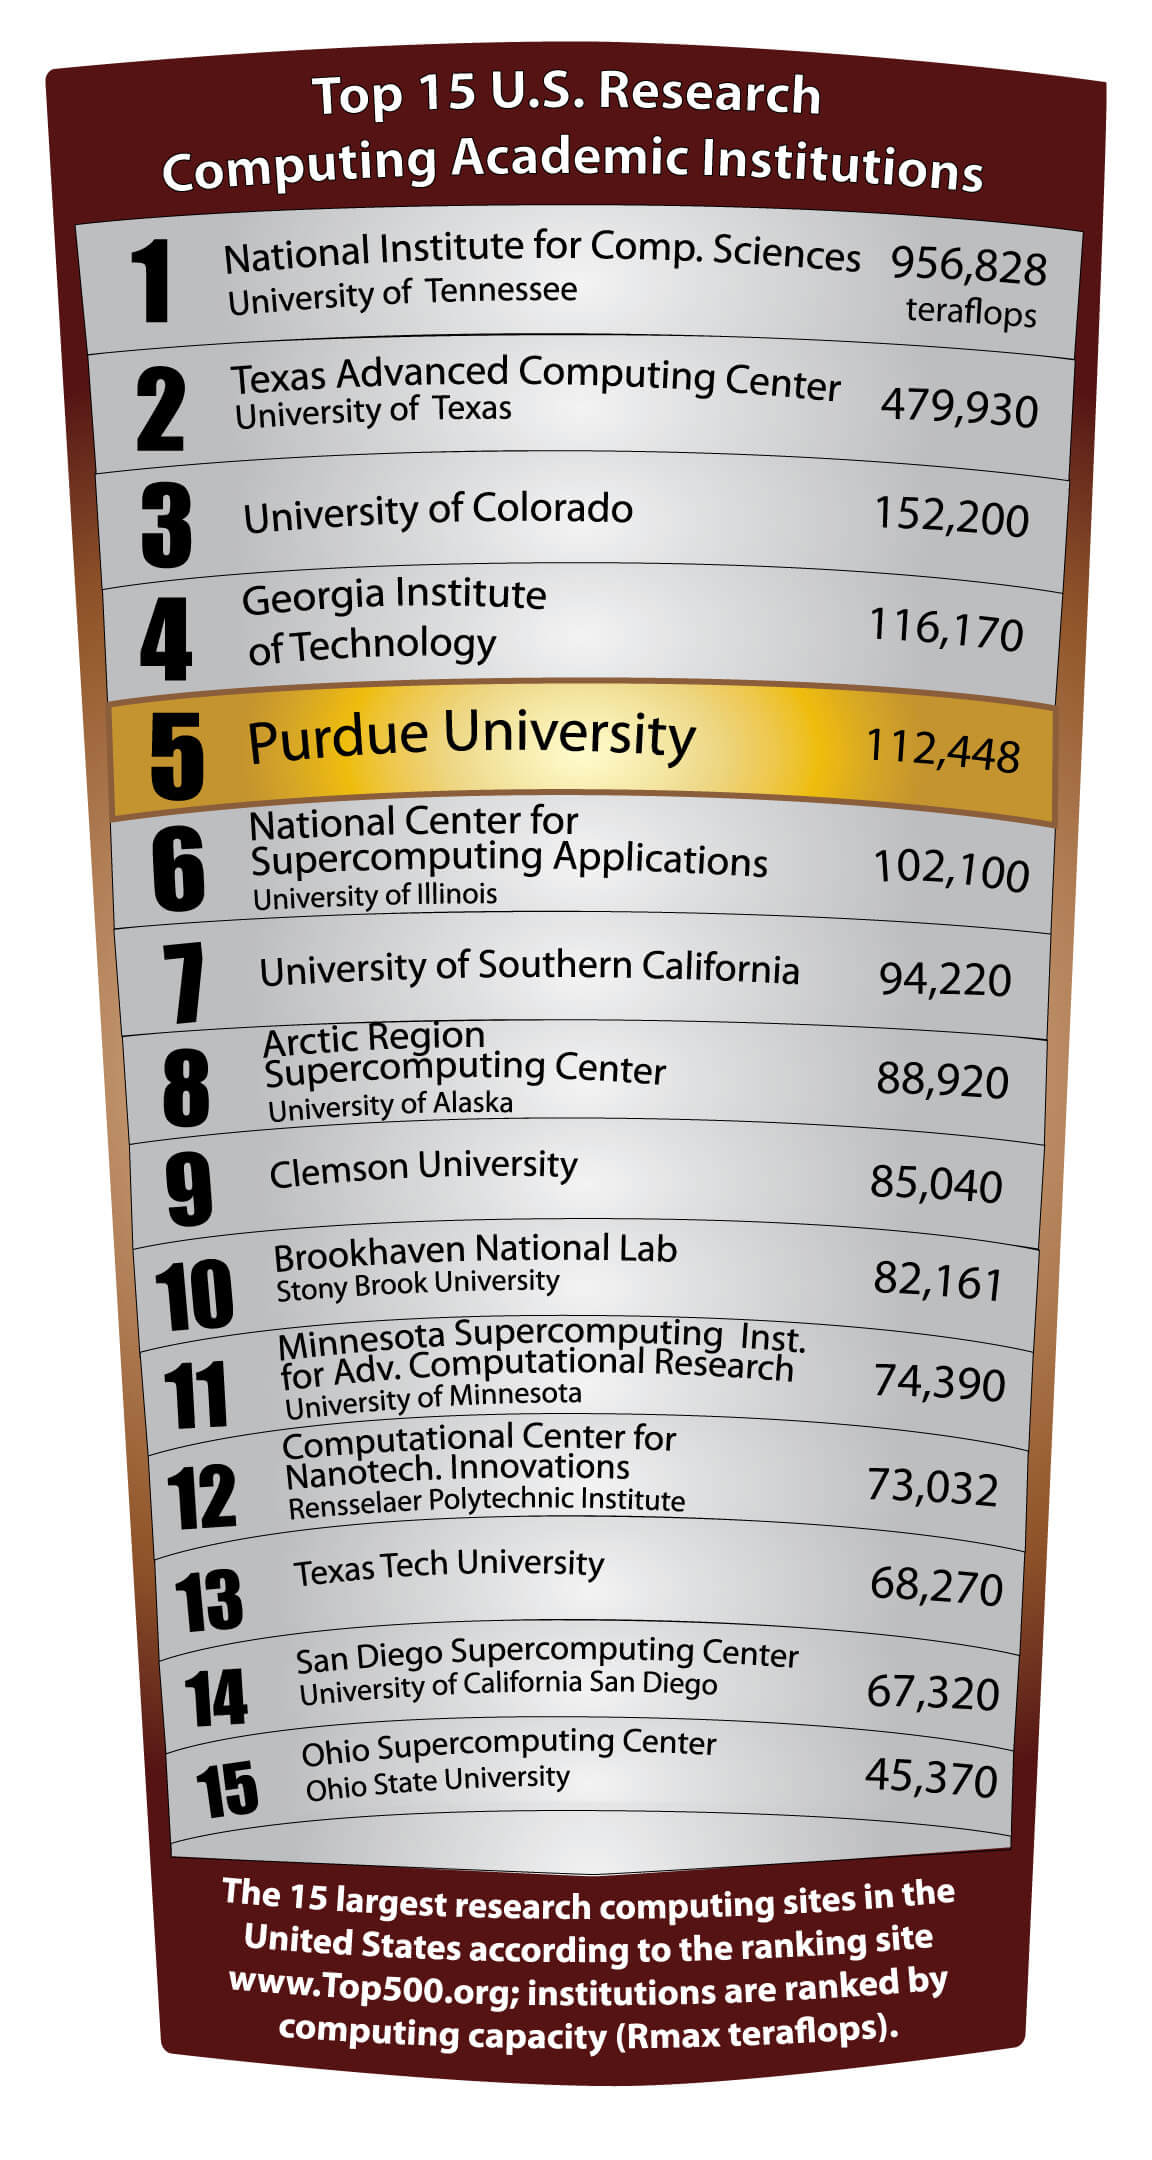 Purdue computing resources rank near top nationally